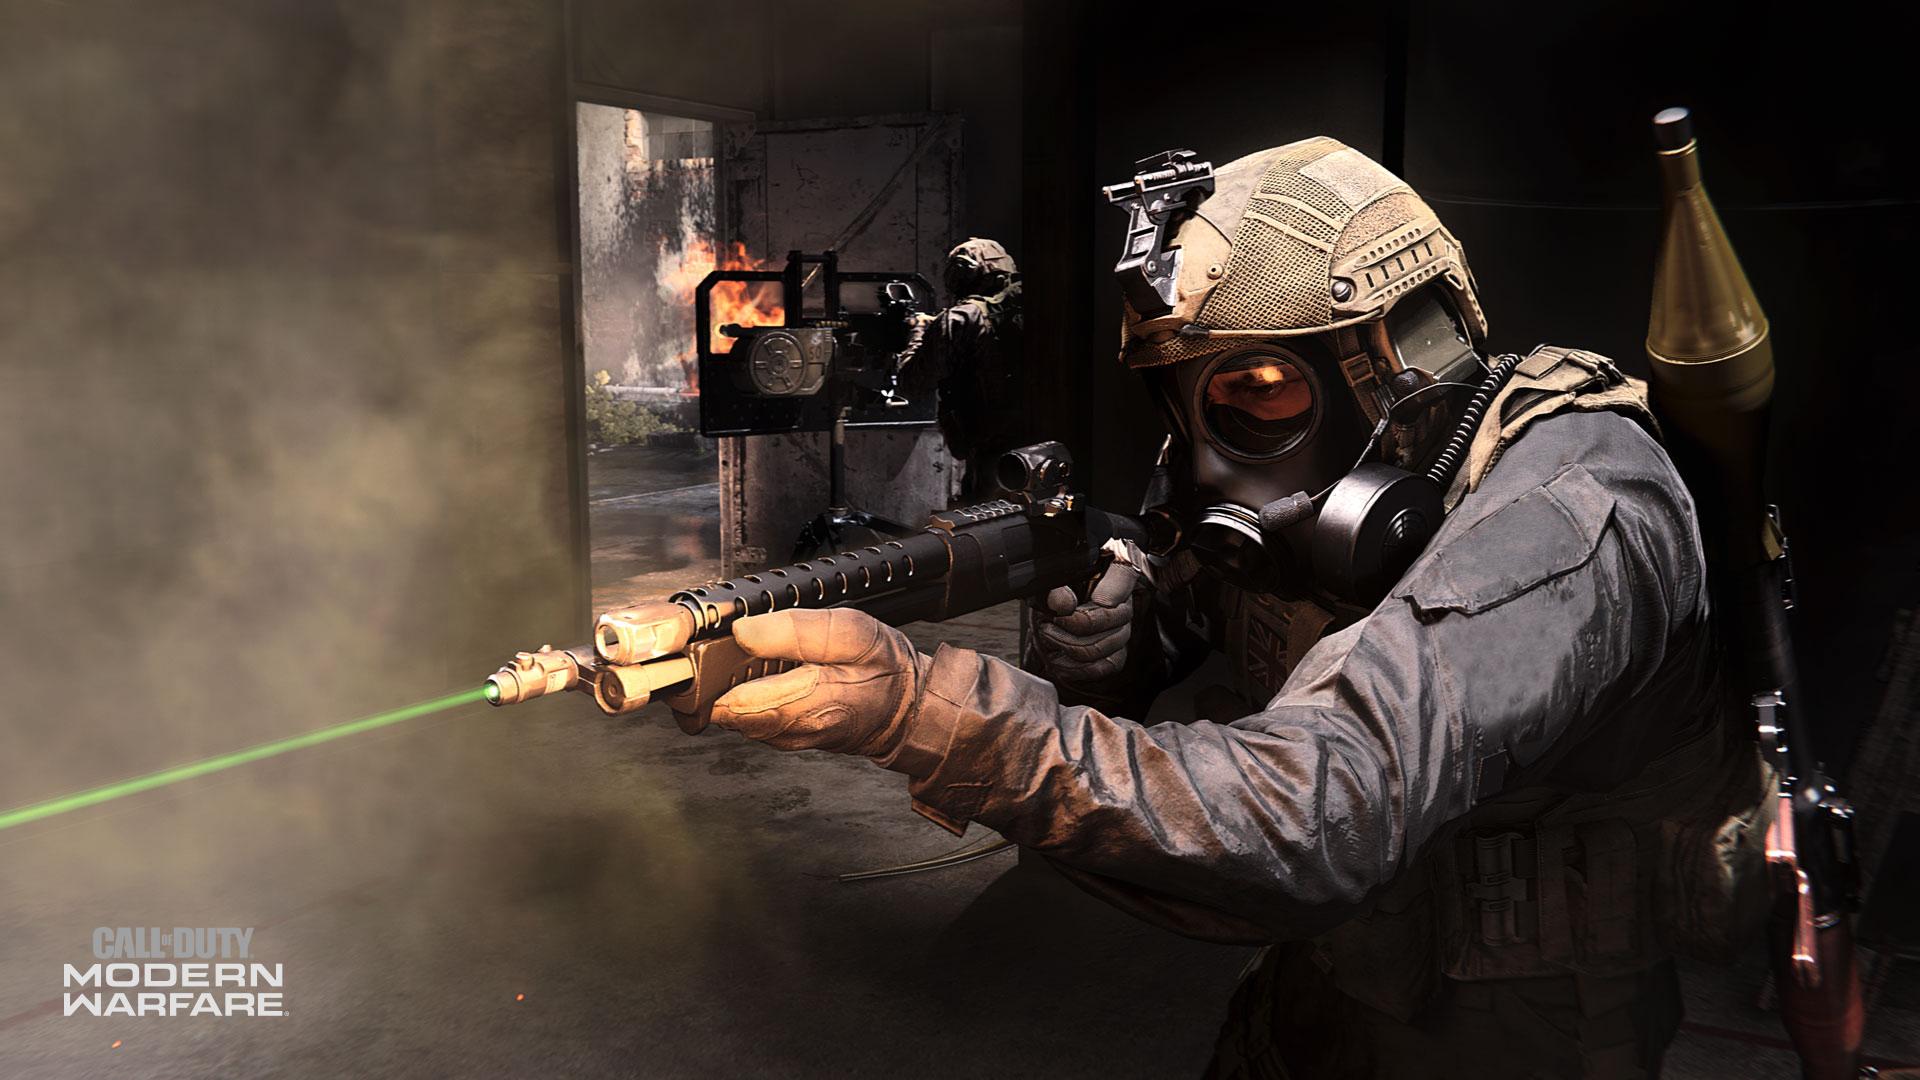 Call of Duty: Modern Warfare 4K Wallpaper 2 out of 4